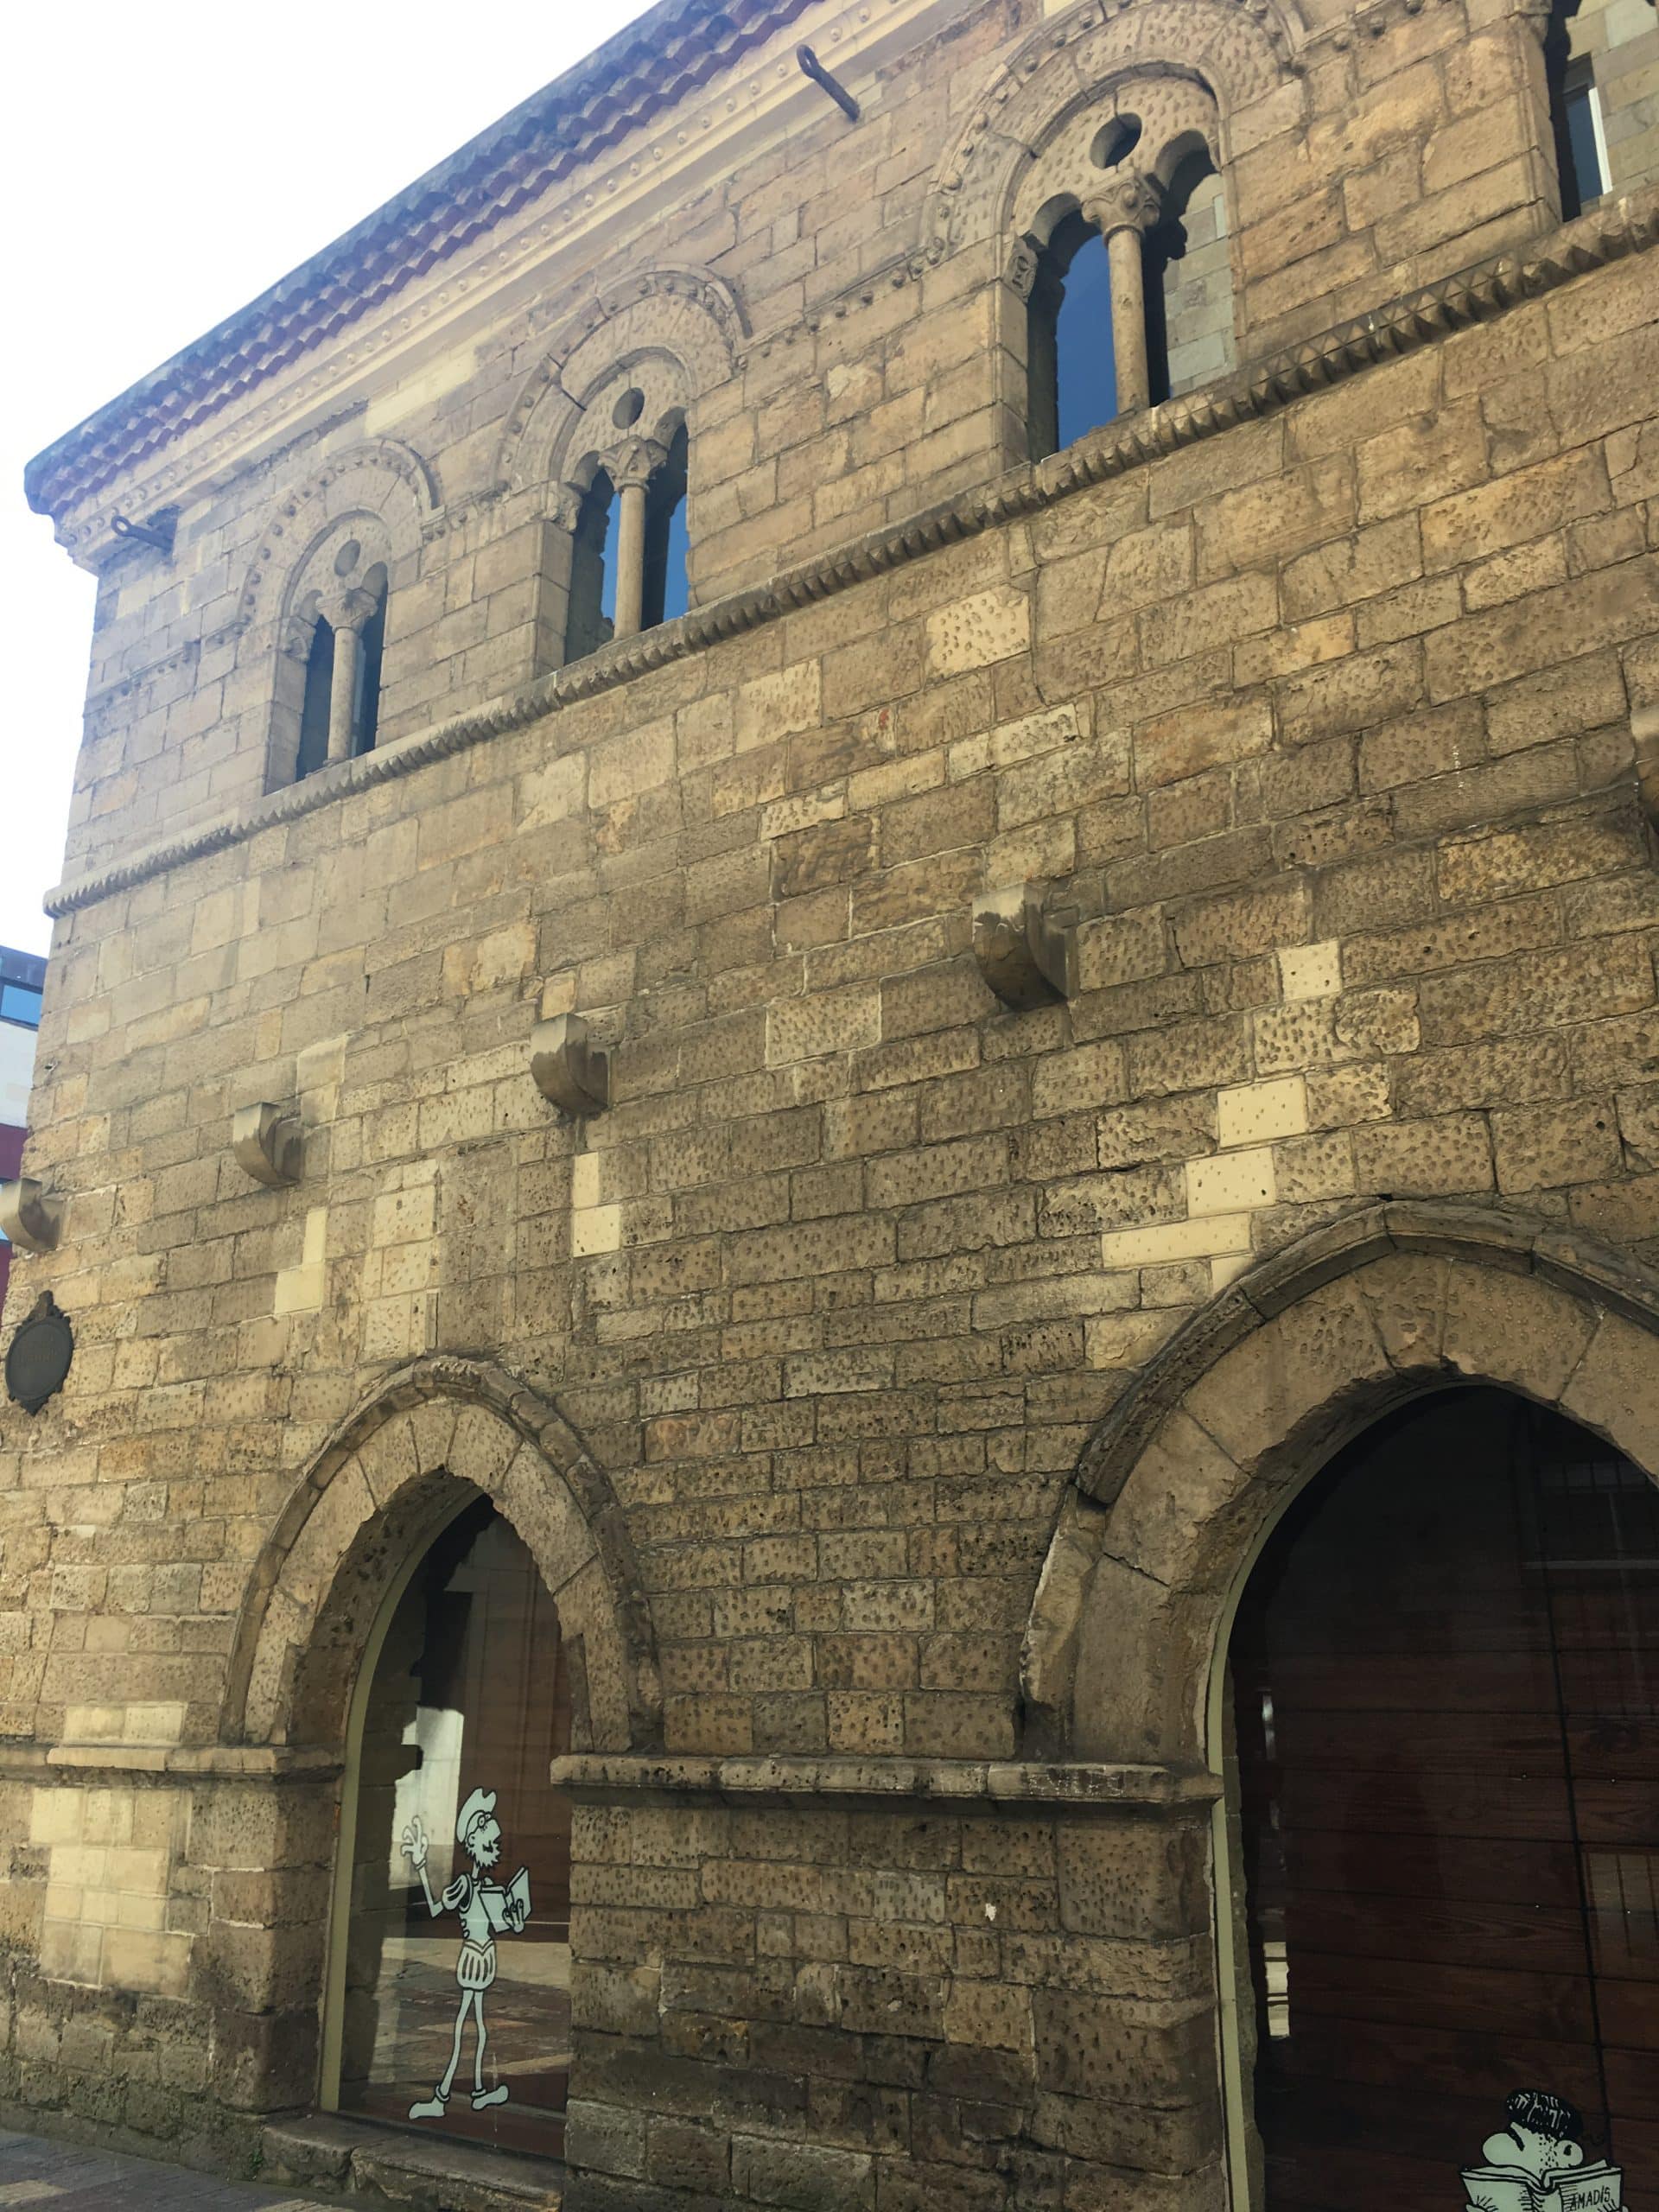 Palacio de Valdecarzana